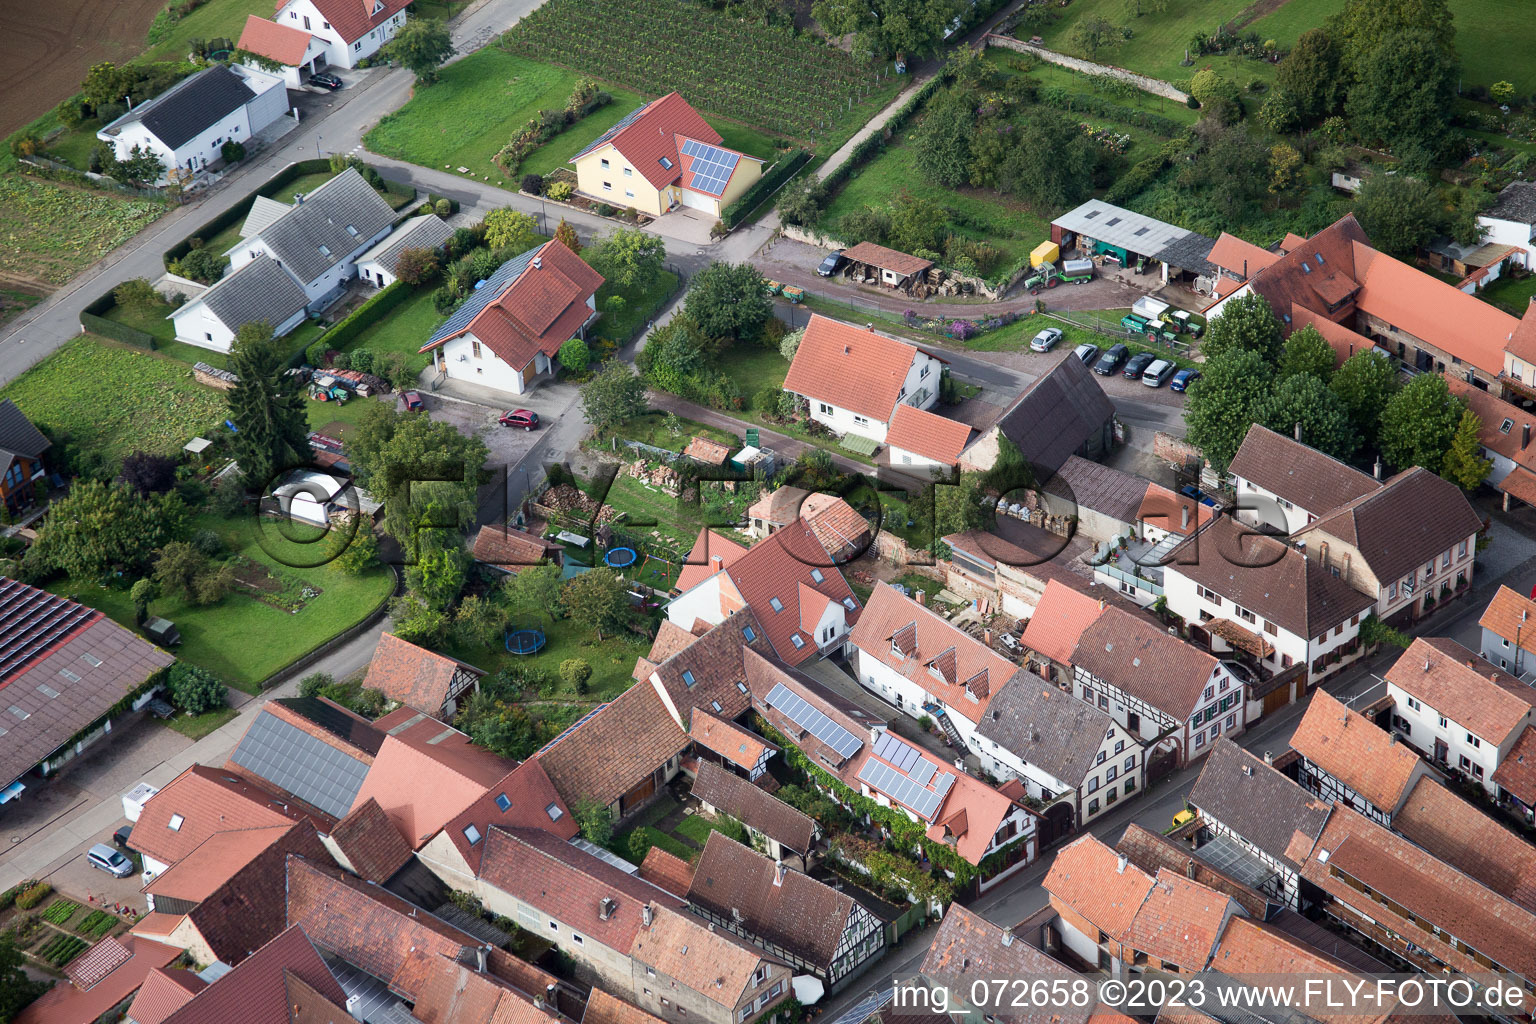 Quartier Heuchelheim in Heuchelheim-Klingen dans le département Rhénanie-Palatinat, Allemagne hors des airs